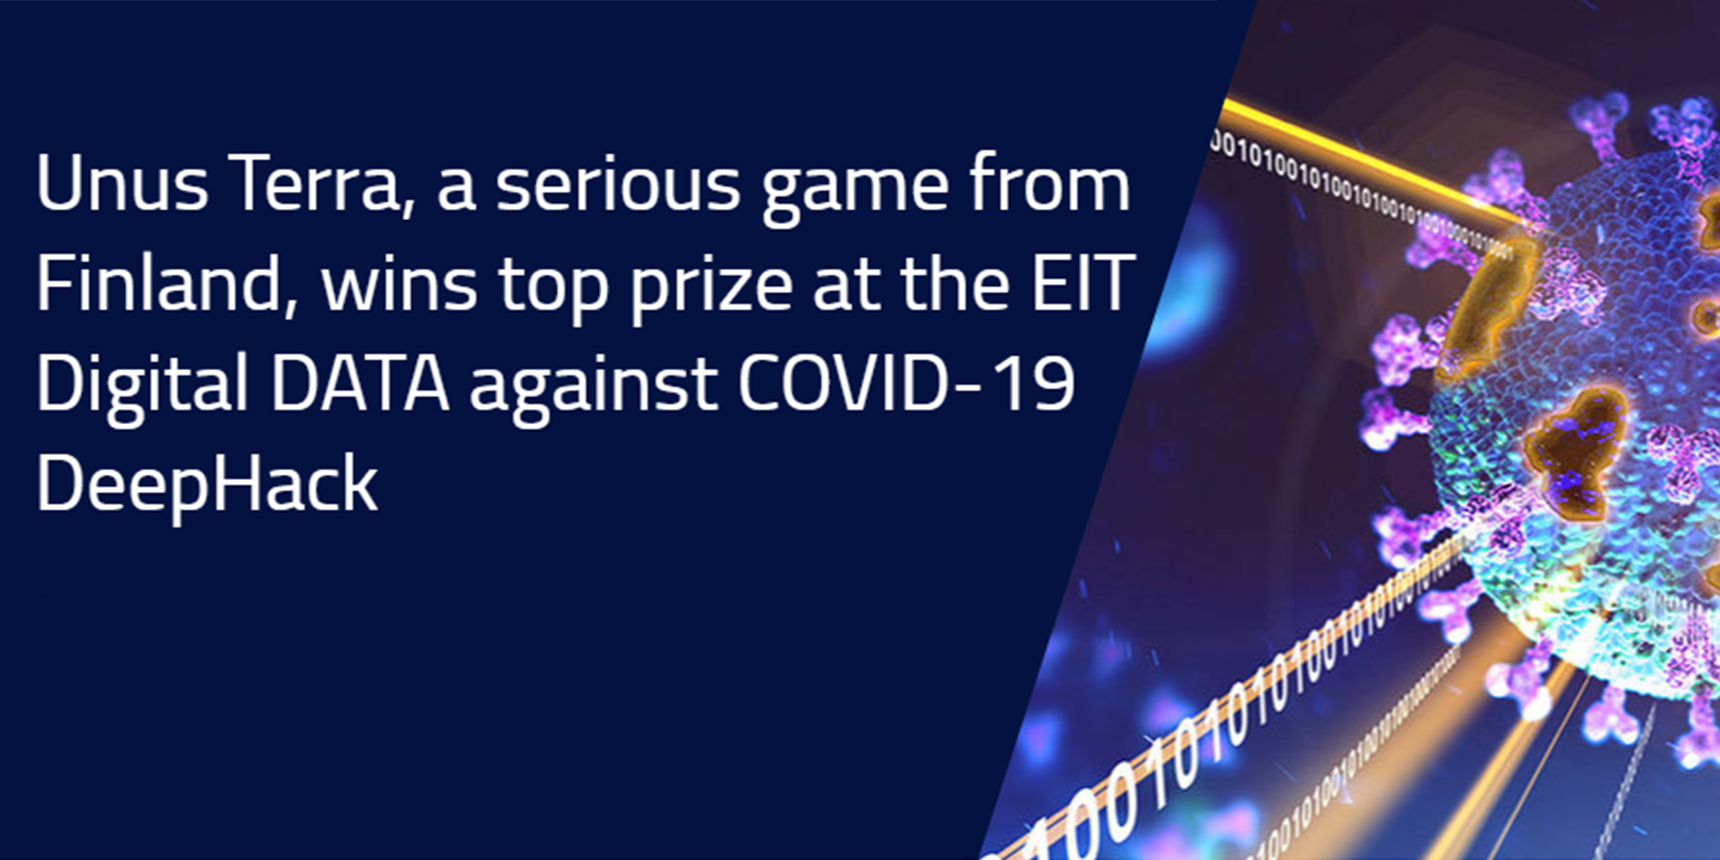 Unus Terra wins top prize at EIT Digital Data against COVID-19 Deephack